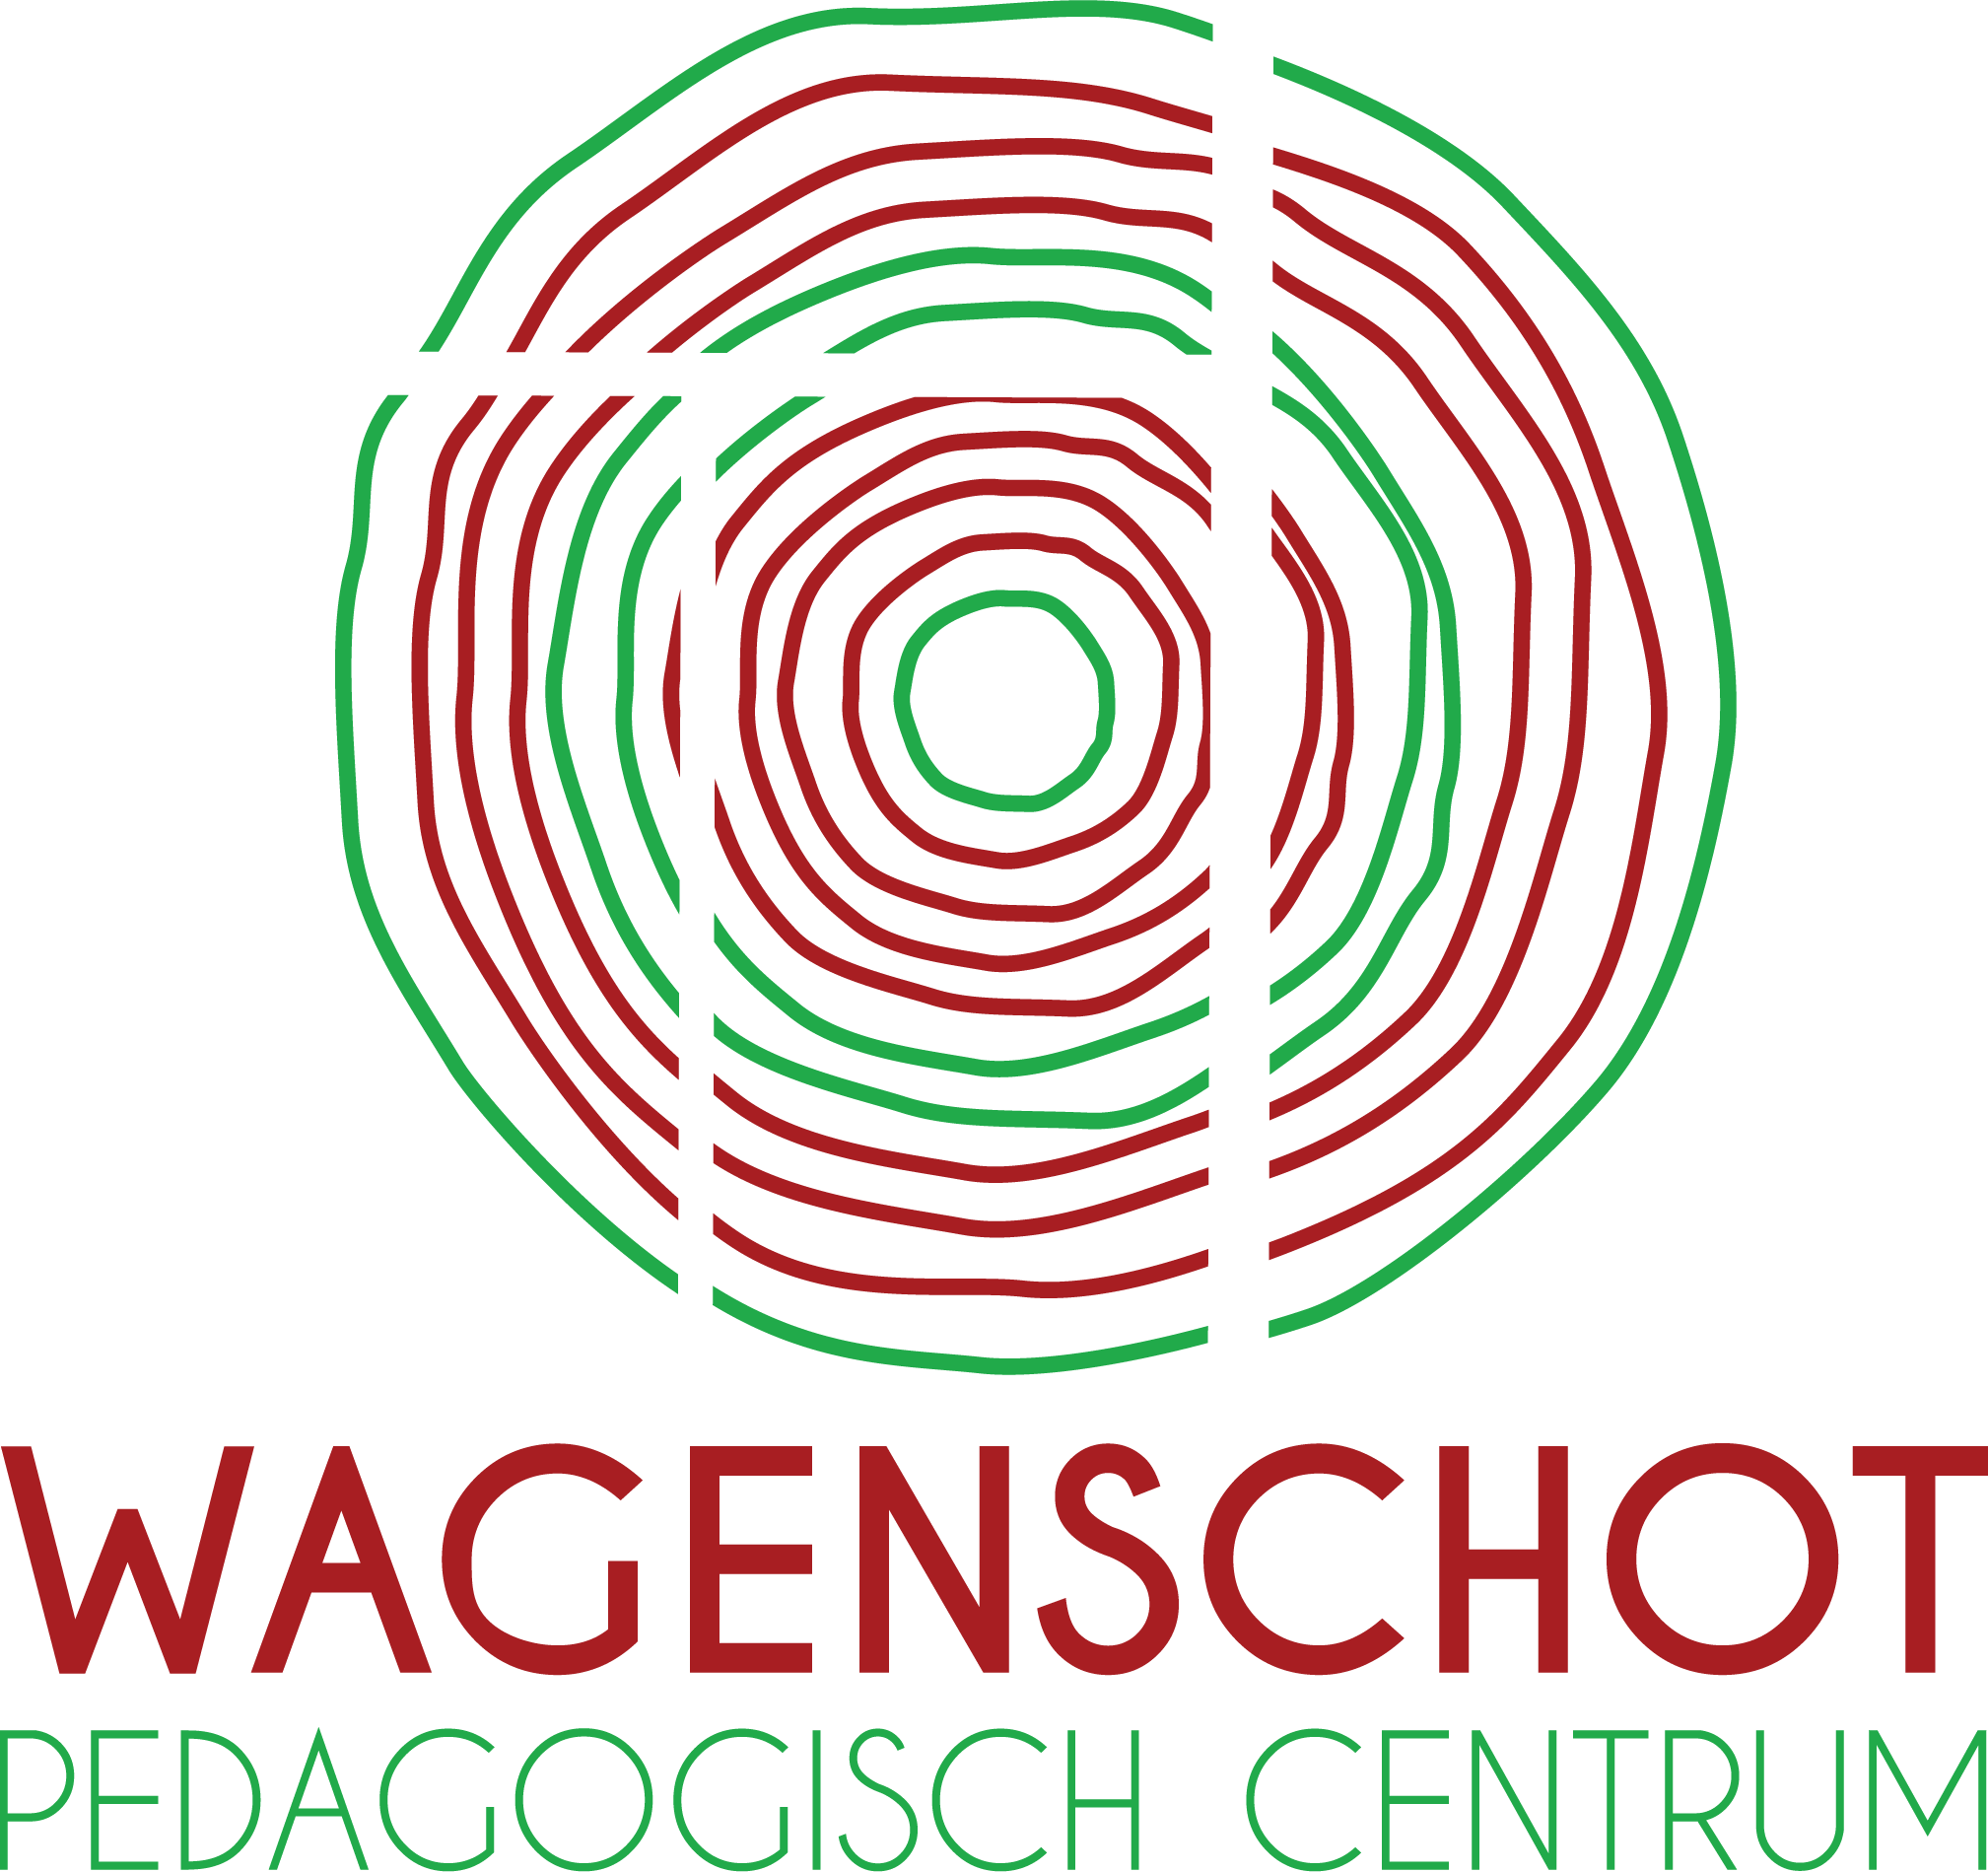 Pedagogisch centrum Wagenschot